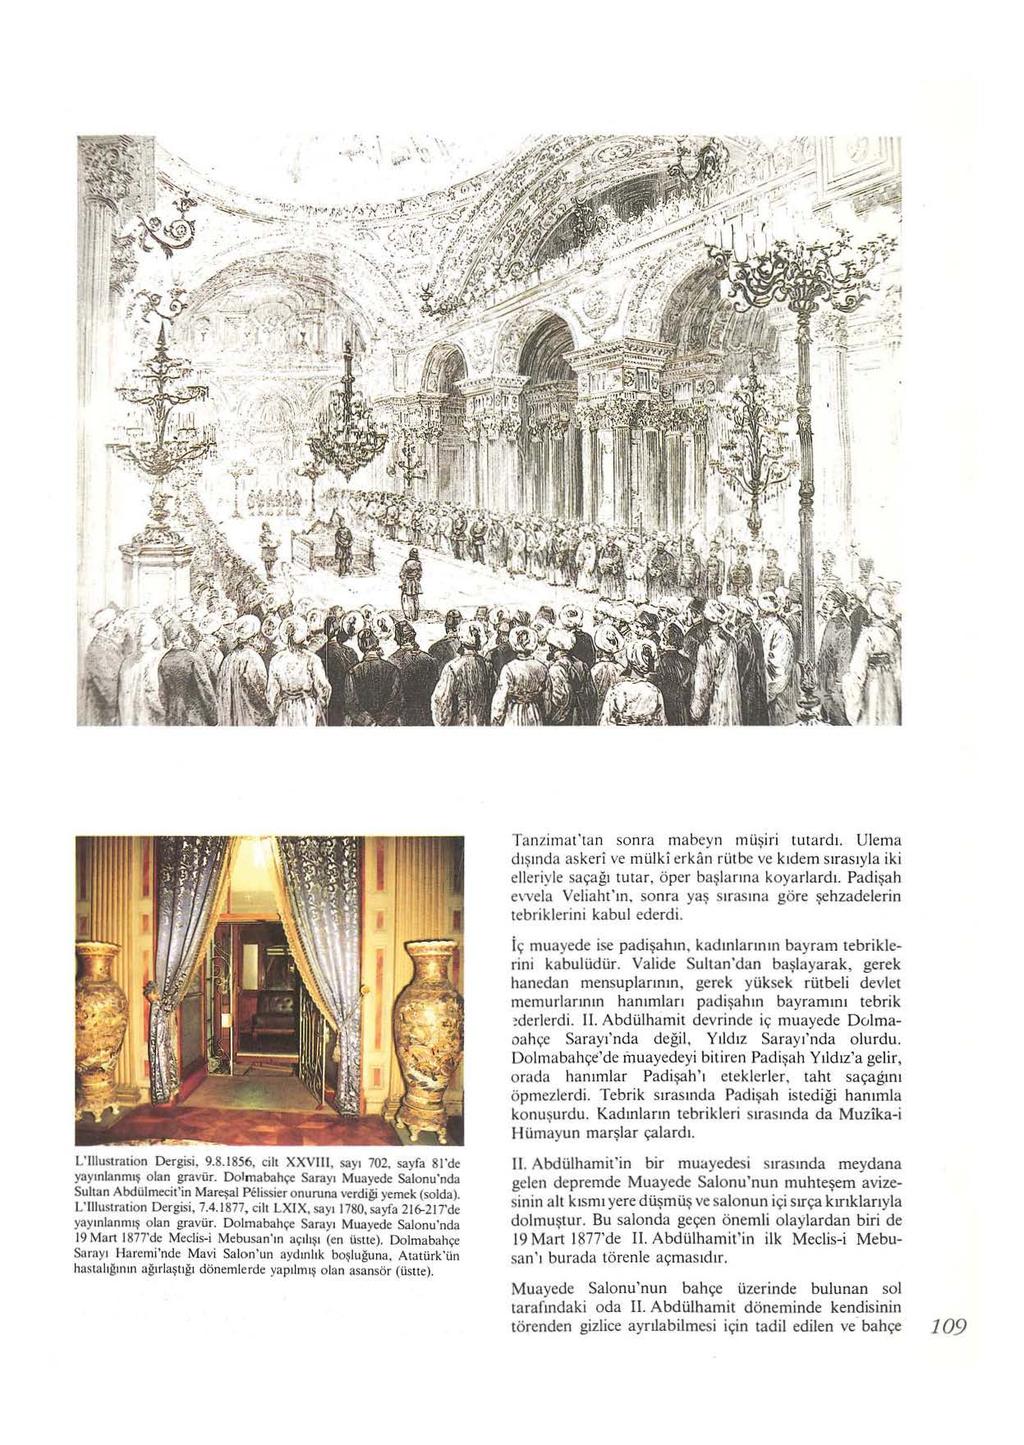 J'.... :: L'lllustration Dergisi, 9.8.1856, cilt XXVlll. sayt 702, sayfa 8l"de yaymlanmt~ olan graviir.